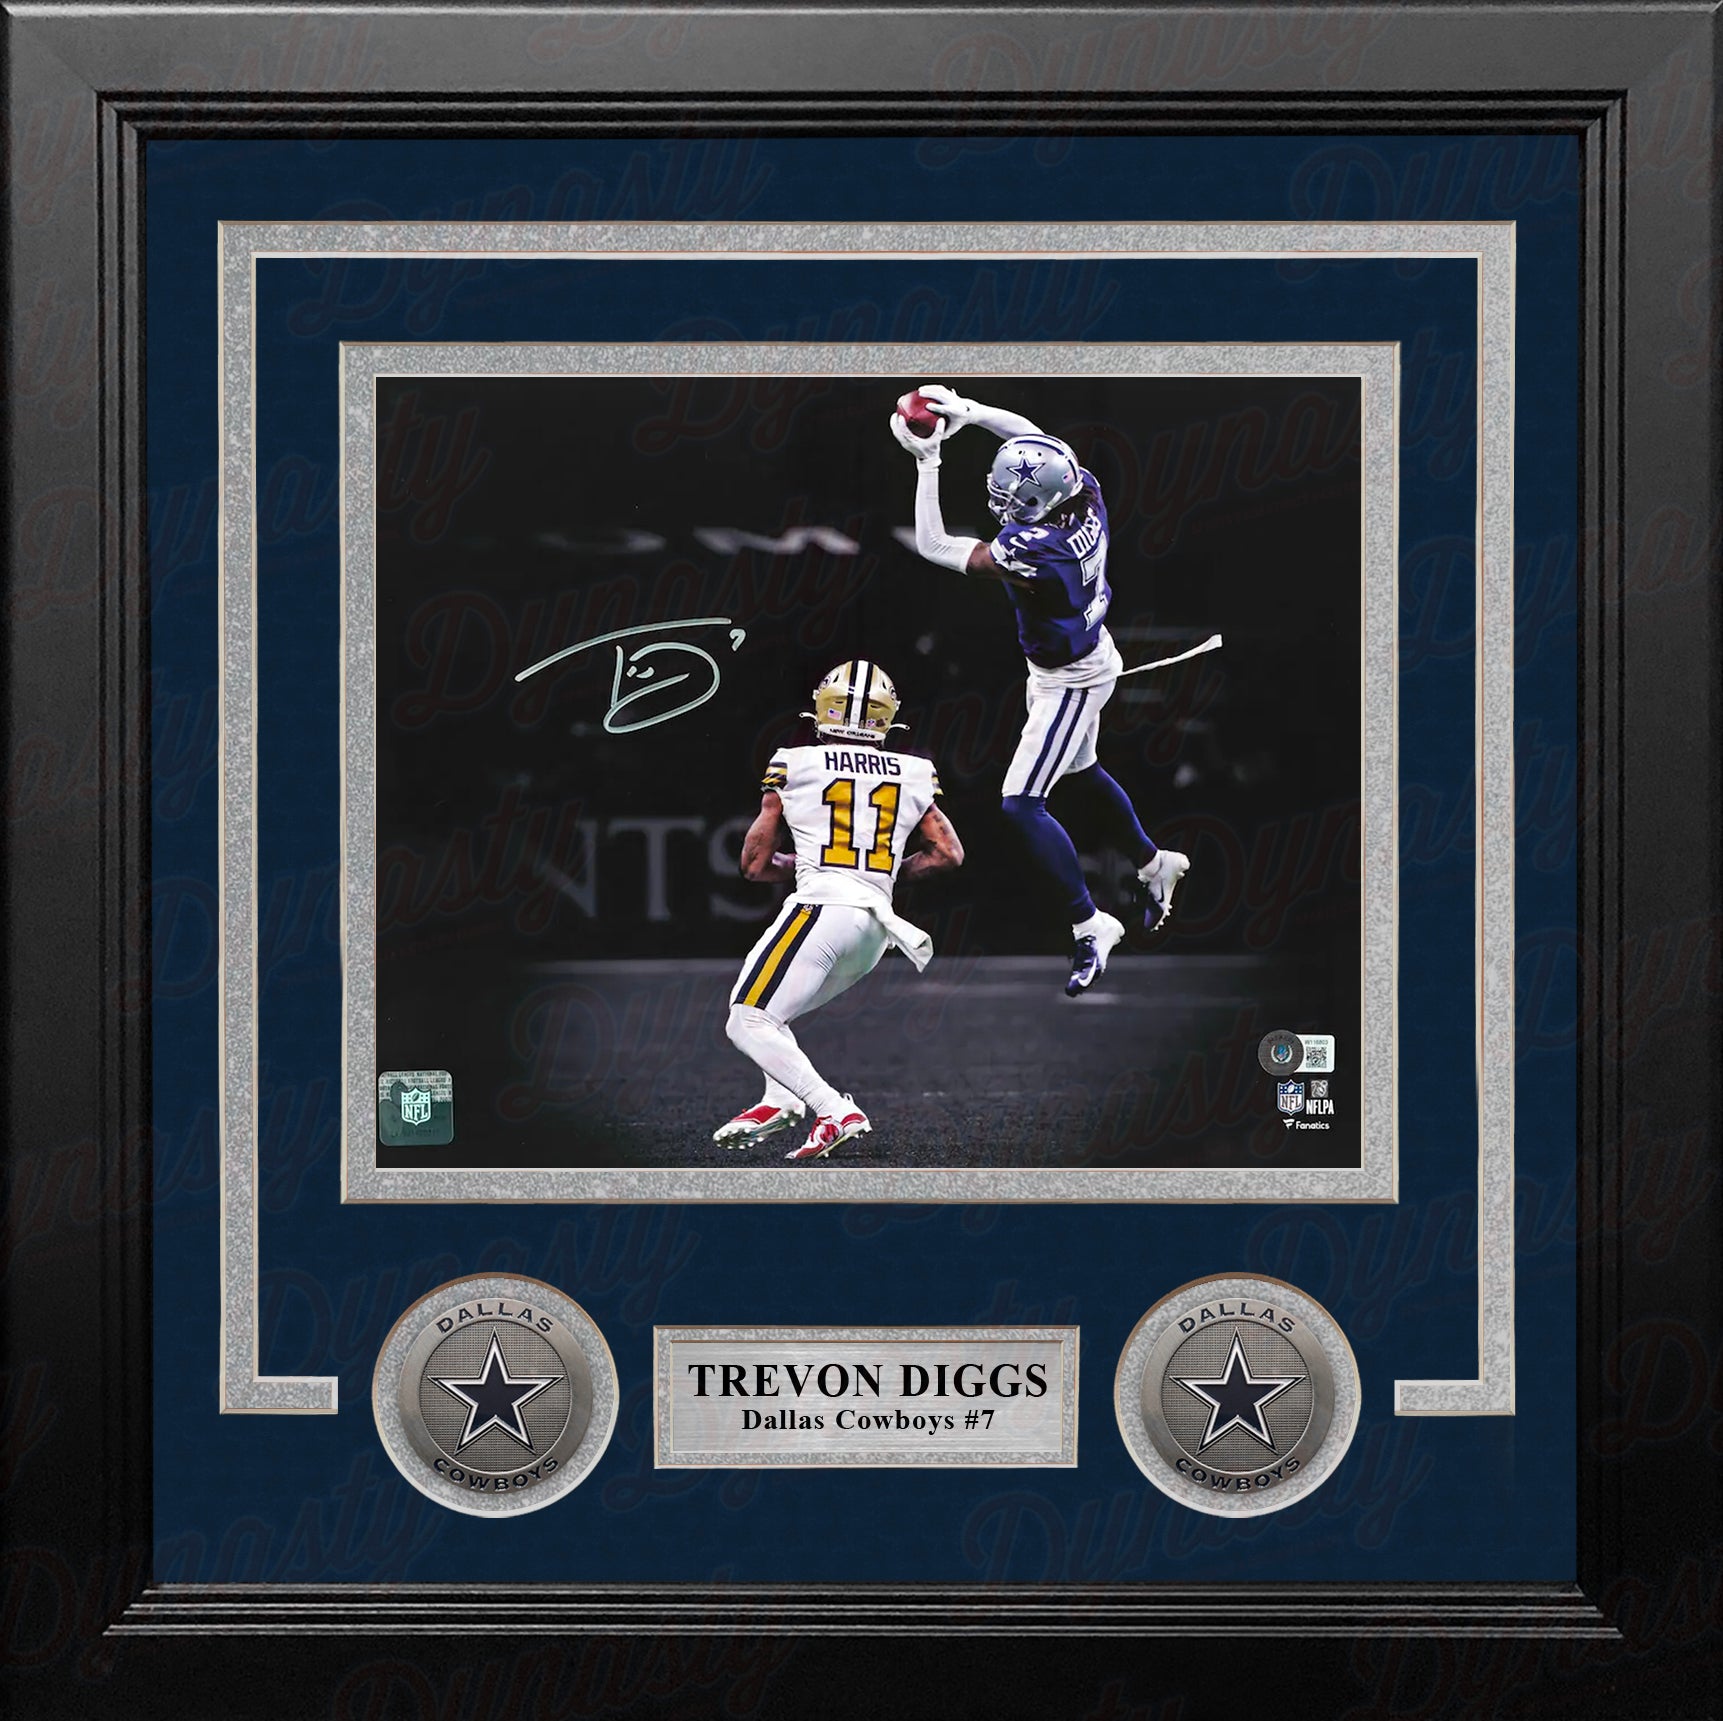 Trevon Diggs Dallas Cowboys Autographed Framed Spotlight Football Photo -  Dynasty Sports & Framing